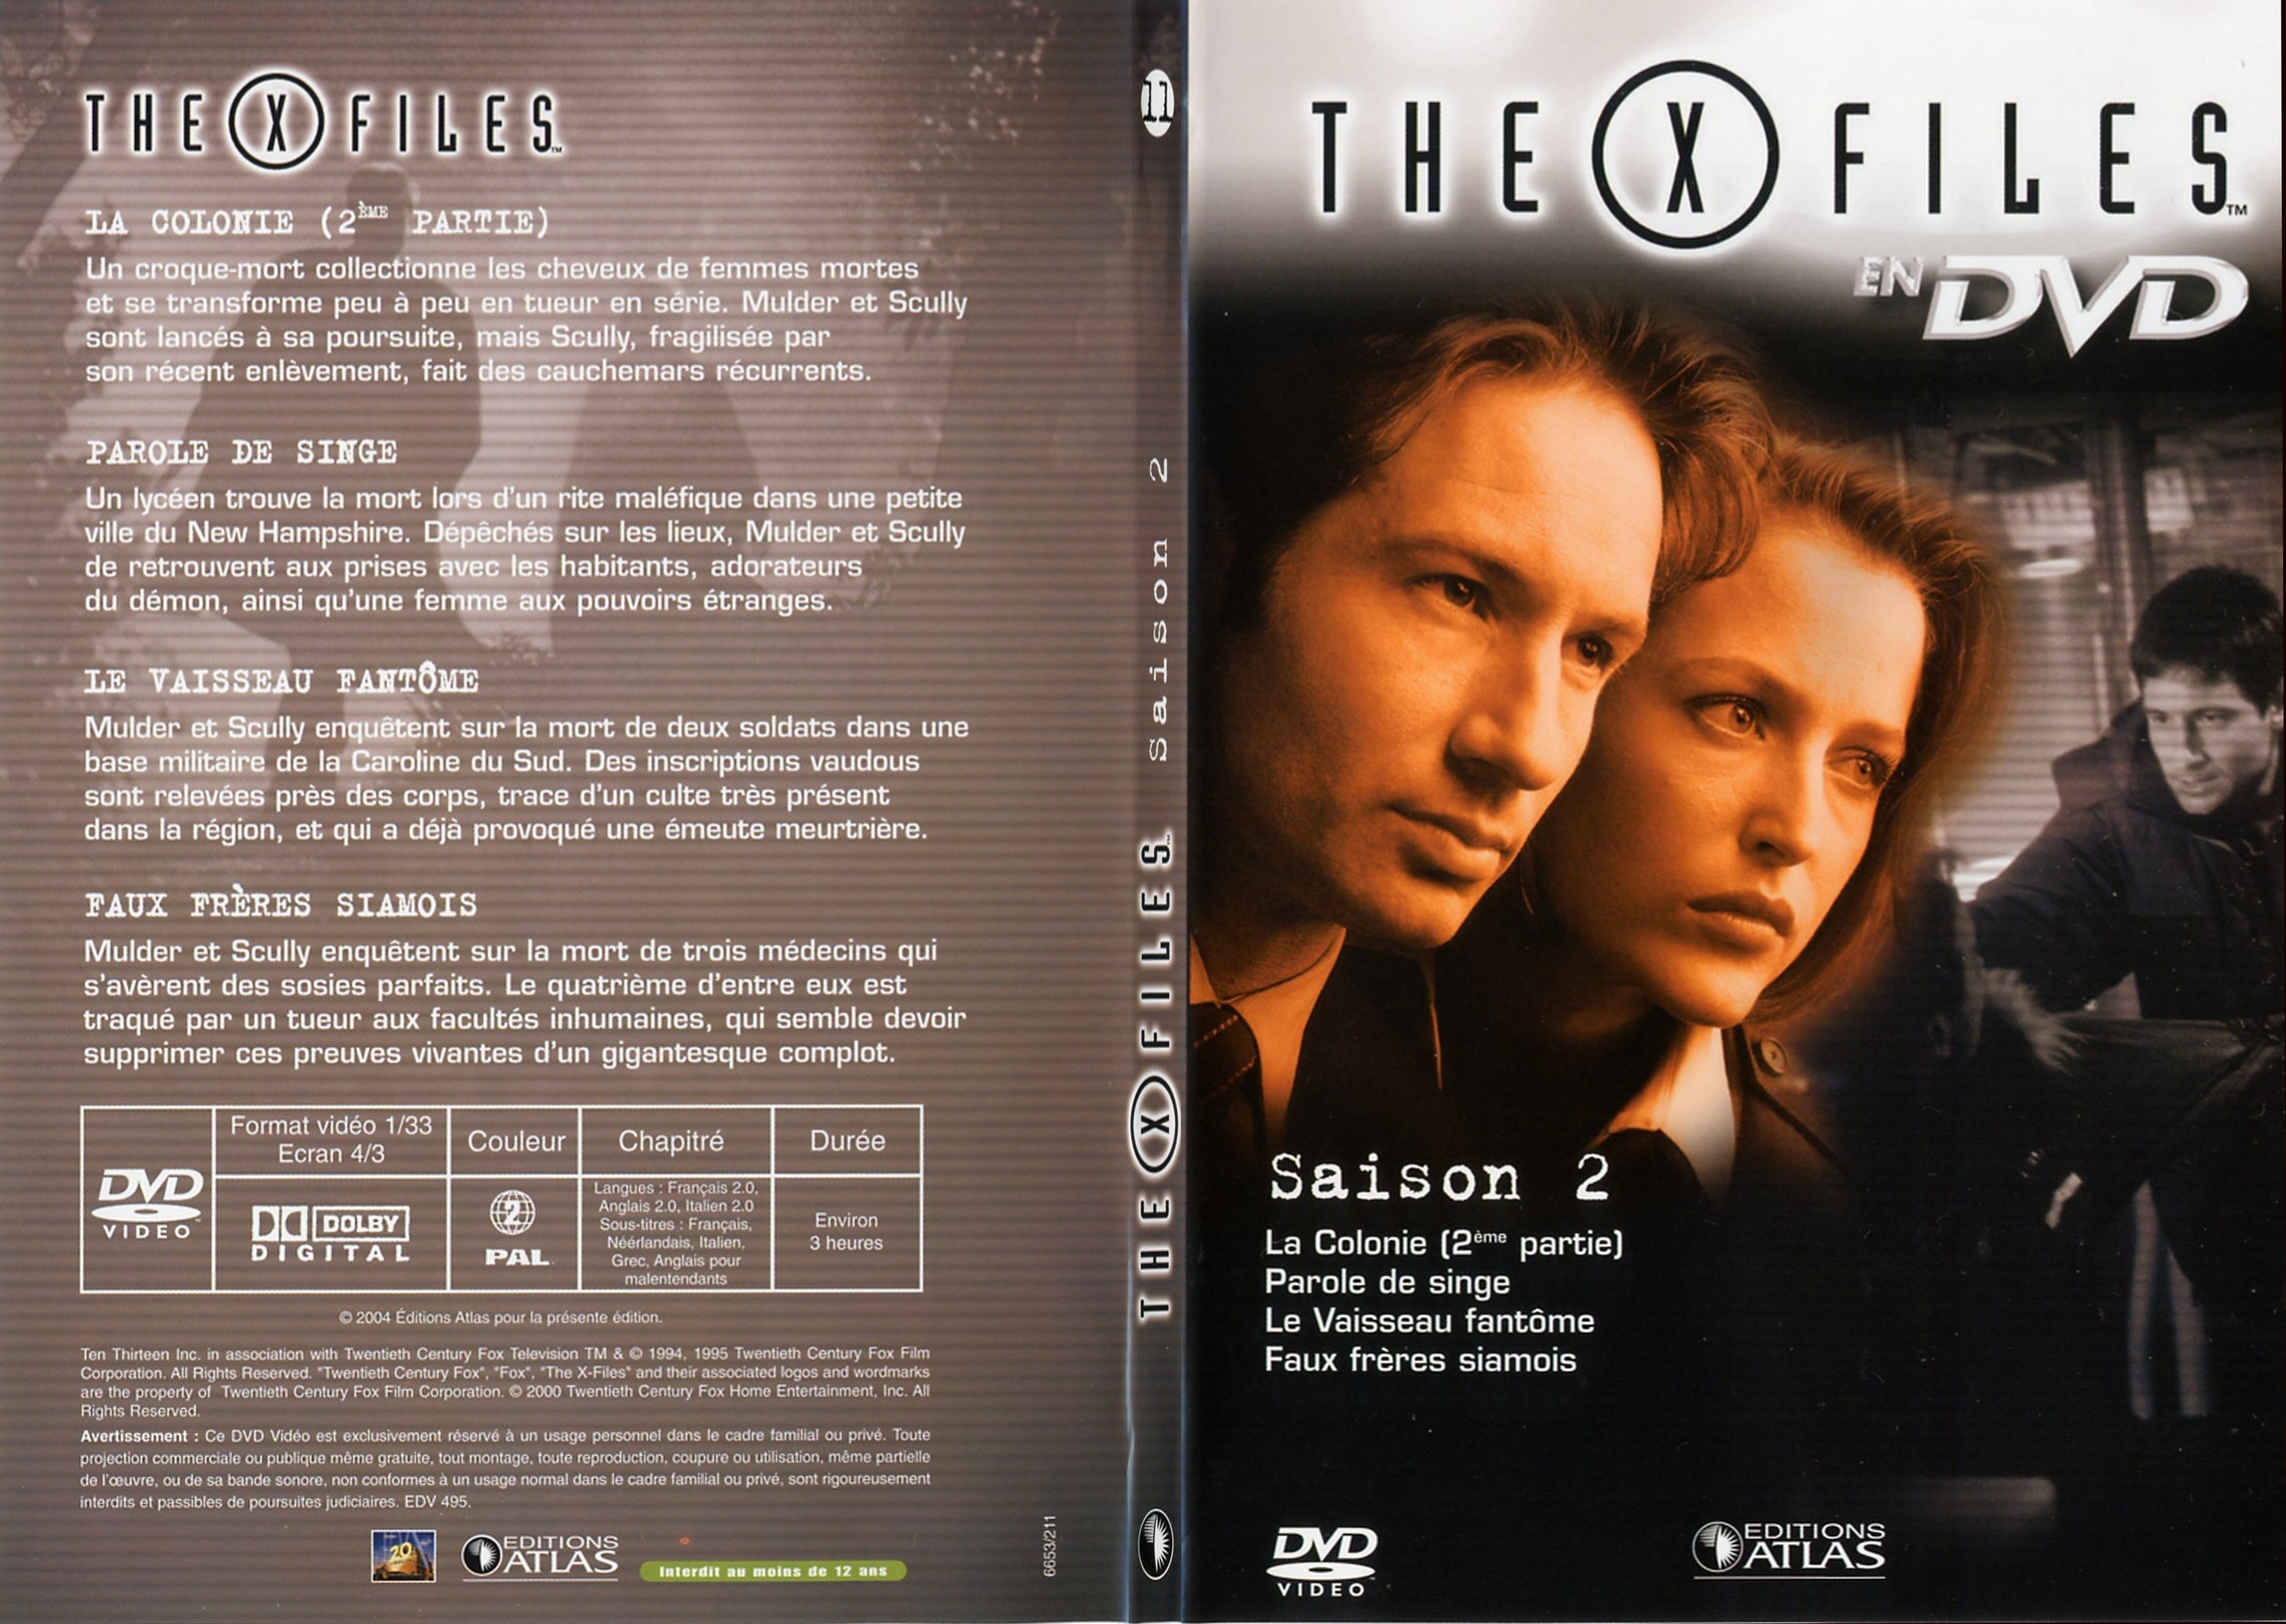 Jaquette DVD X files saison 2 DVD 11 - SLIM